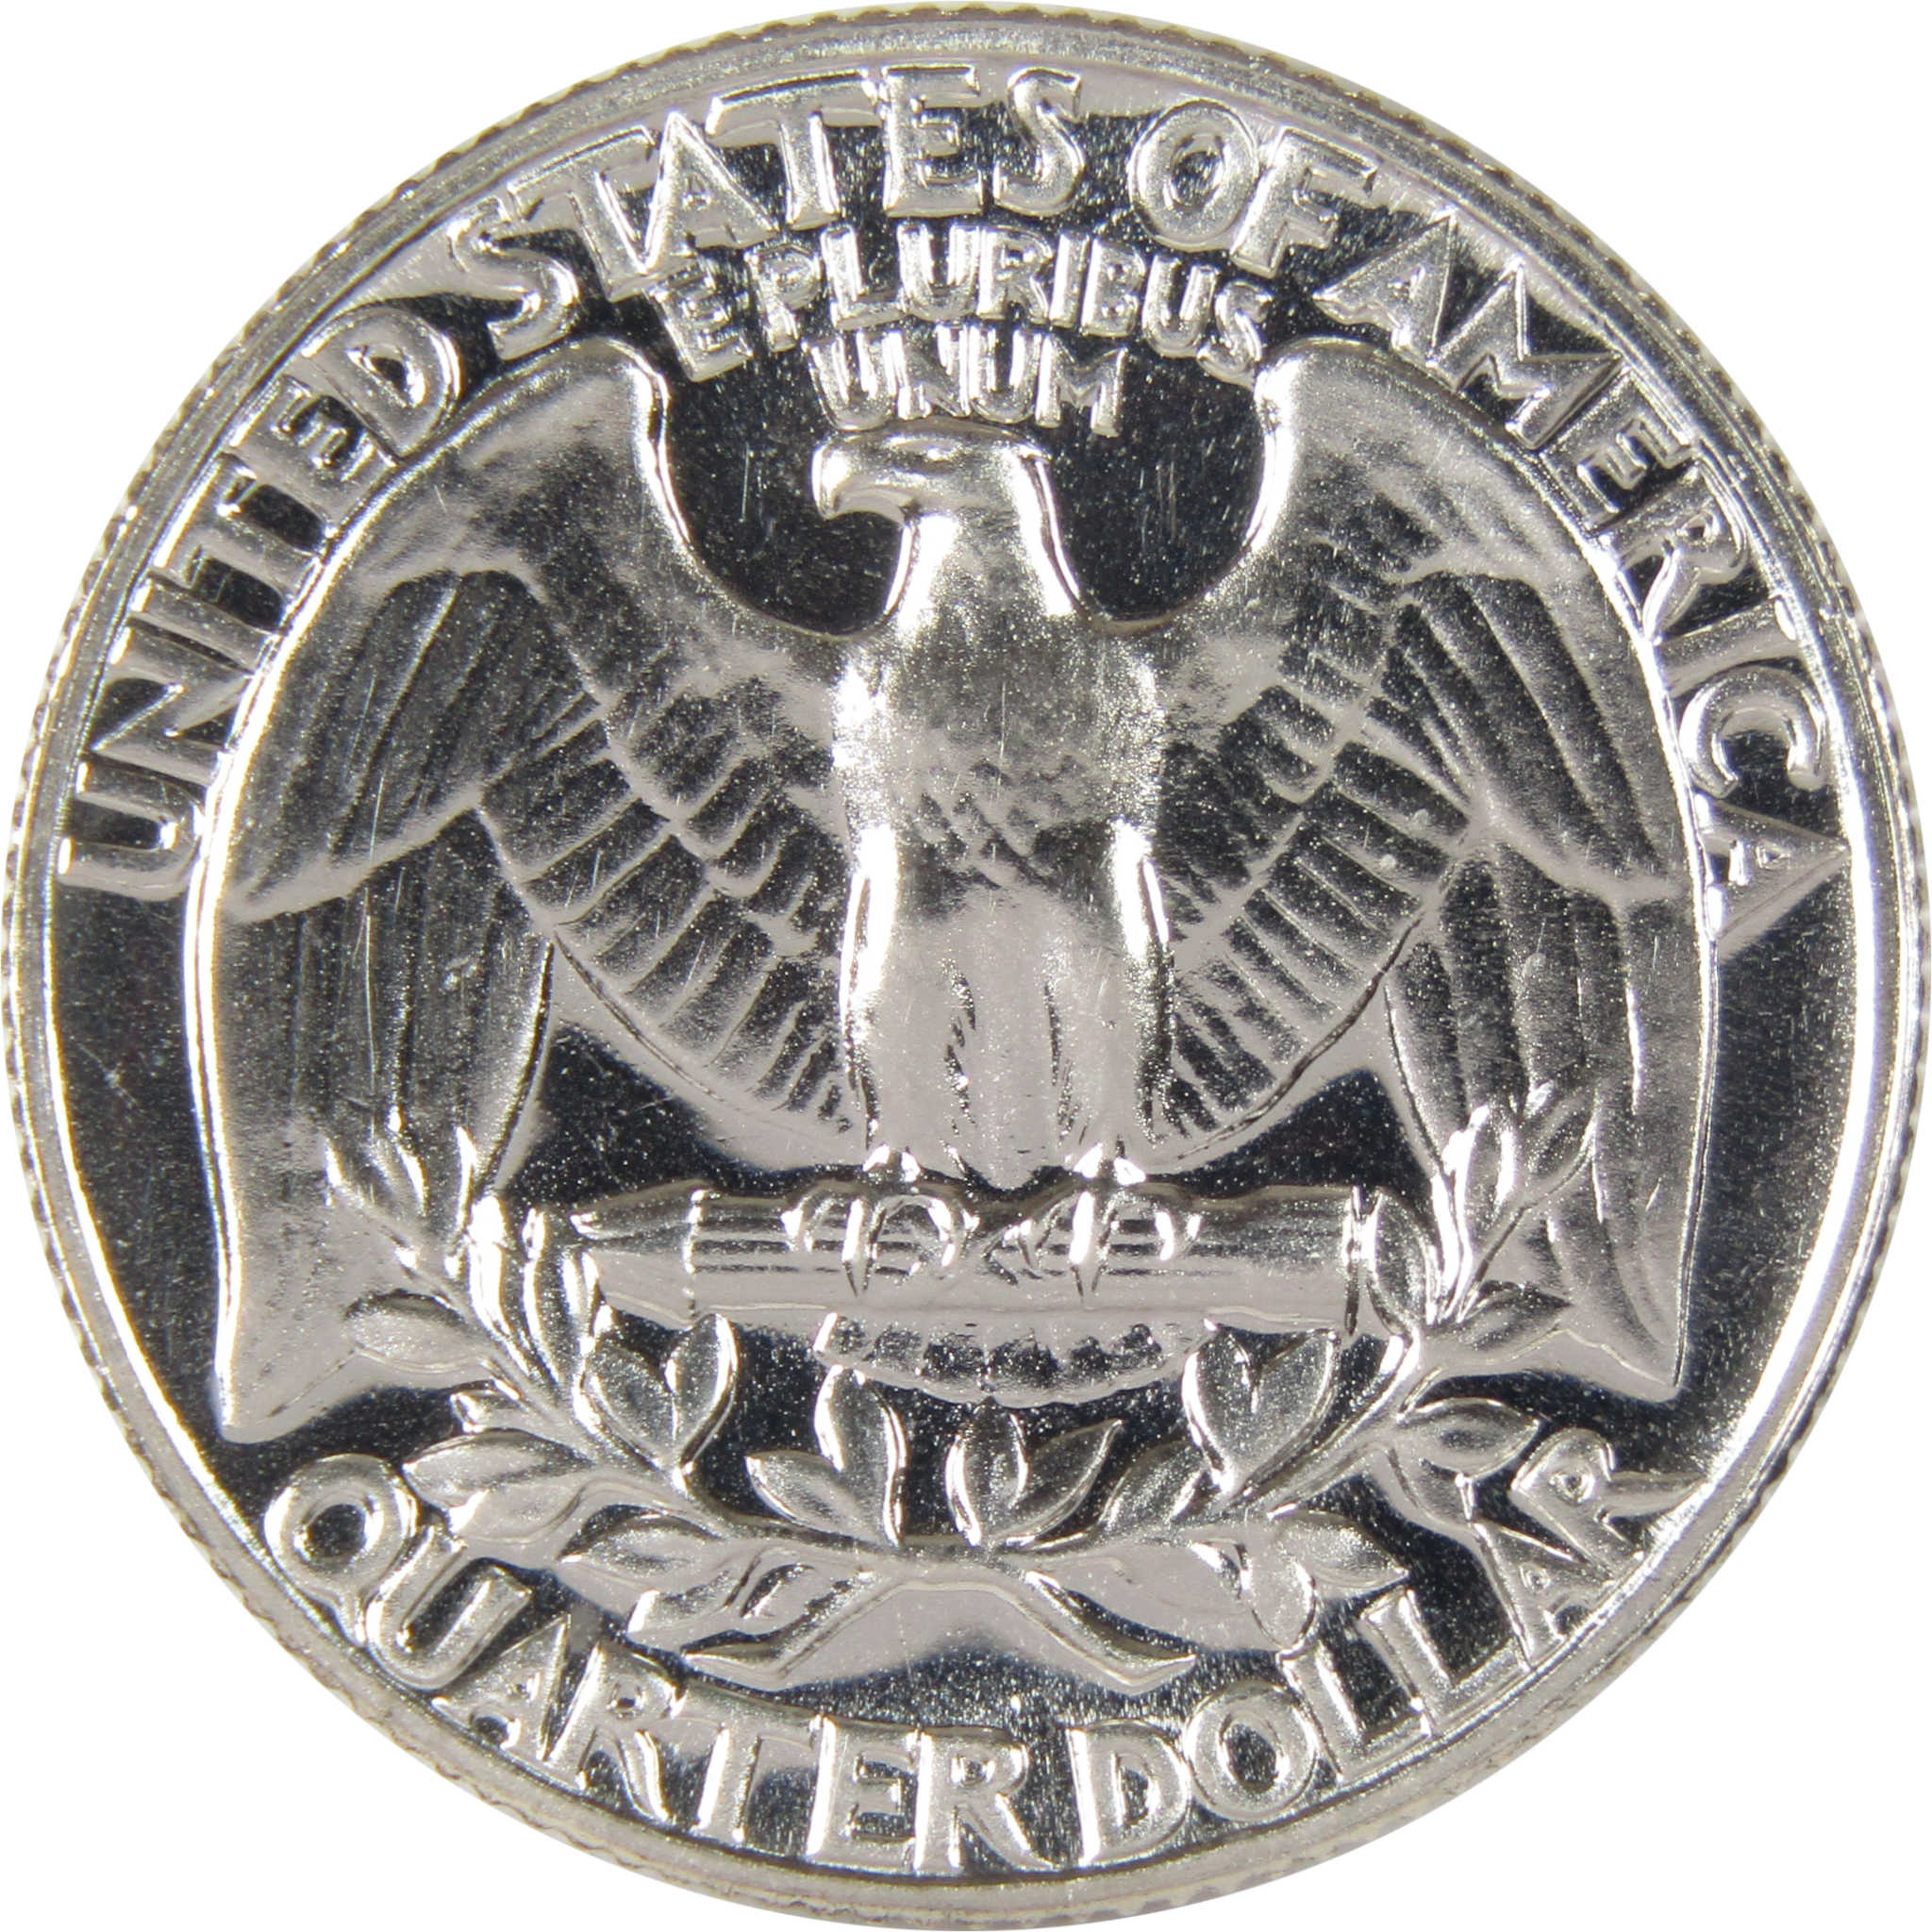 1960 Washington Quarter Silver 25c Proof Coin